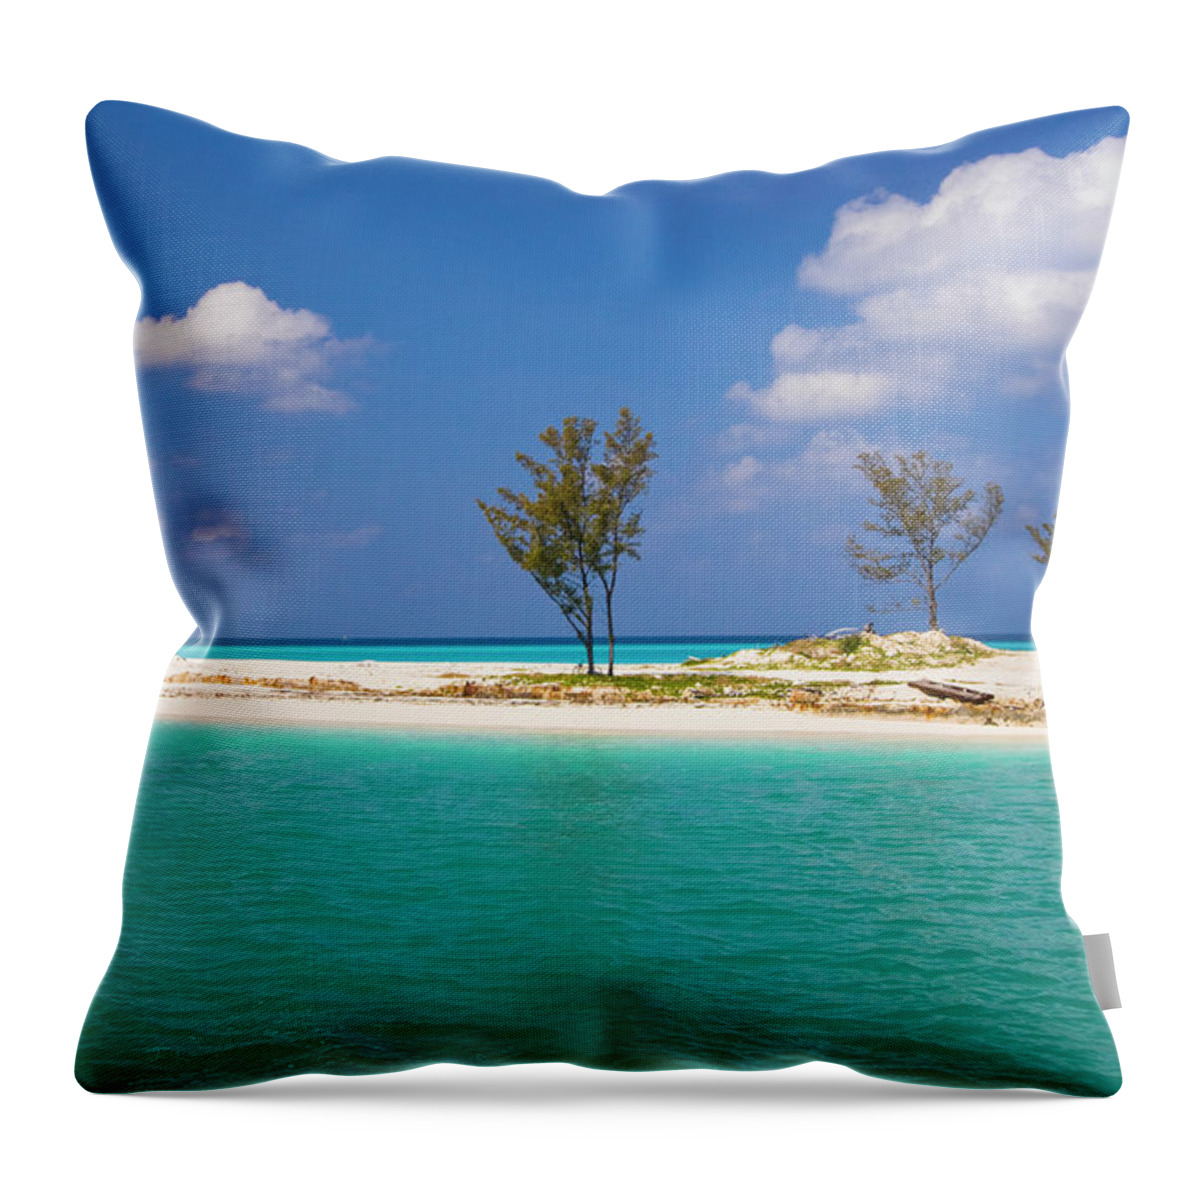 Scenics Throw Pillow featuring the photograph Bimini Atoll Island And Beach, Bahamas by © Marie-ange Ostré